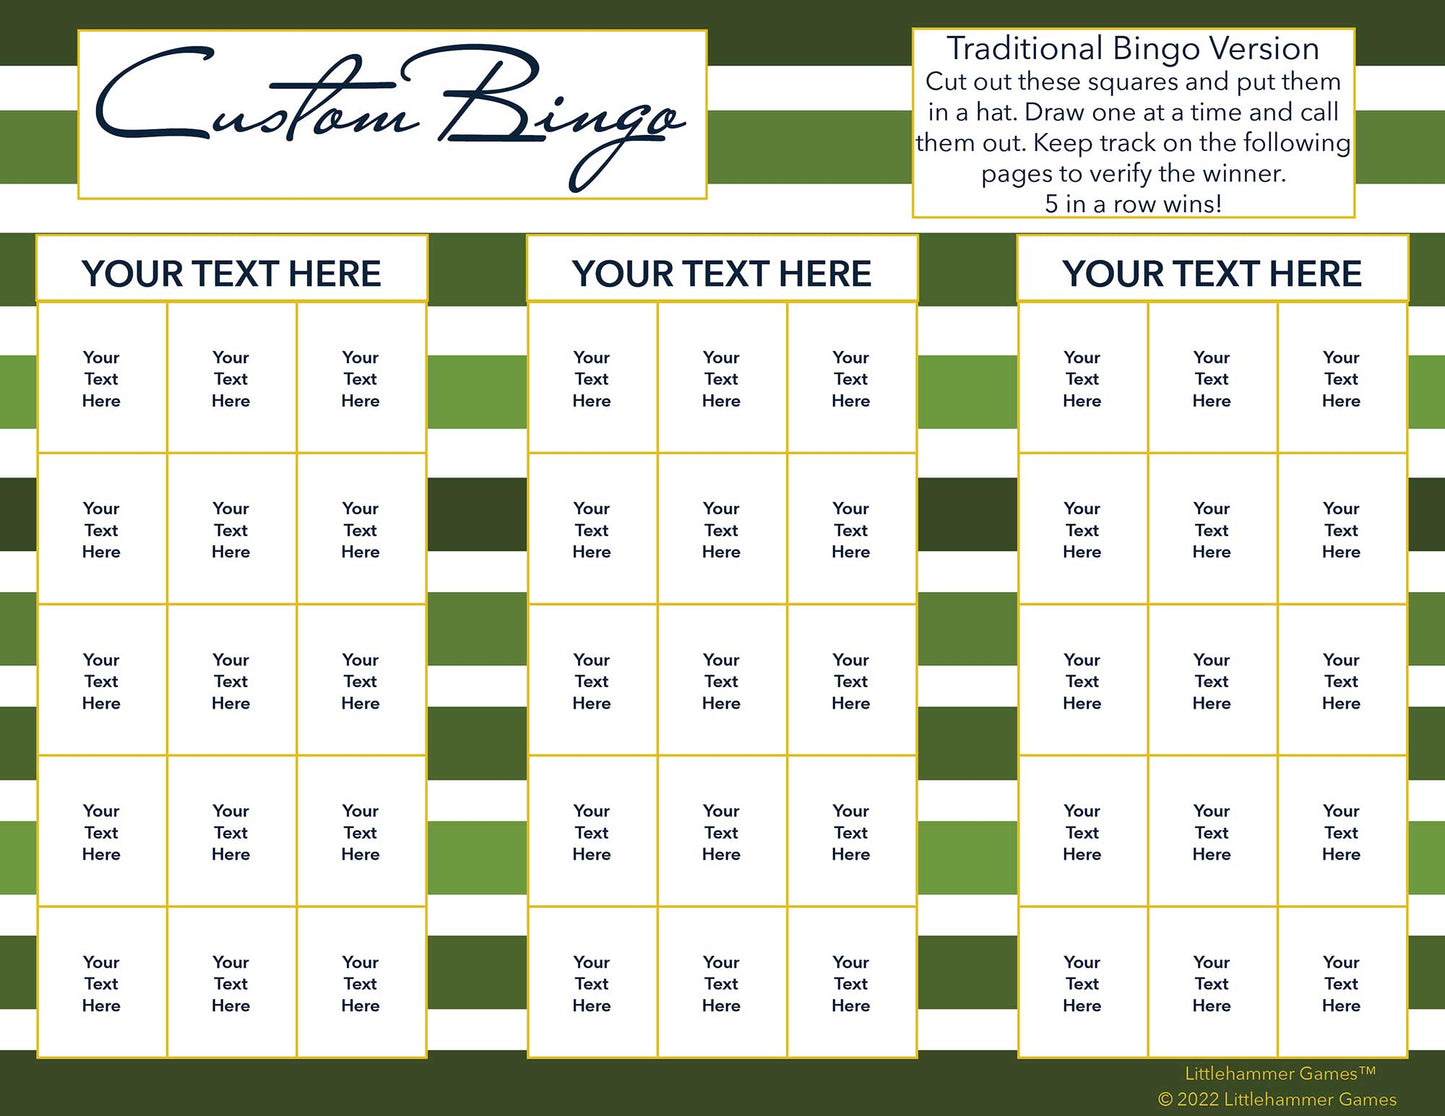 Custom Bingo calling card with a green-striped background